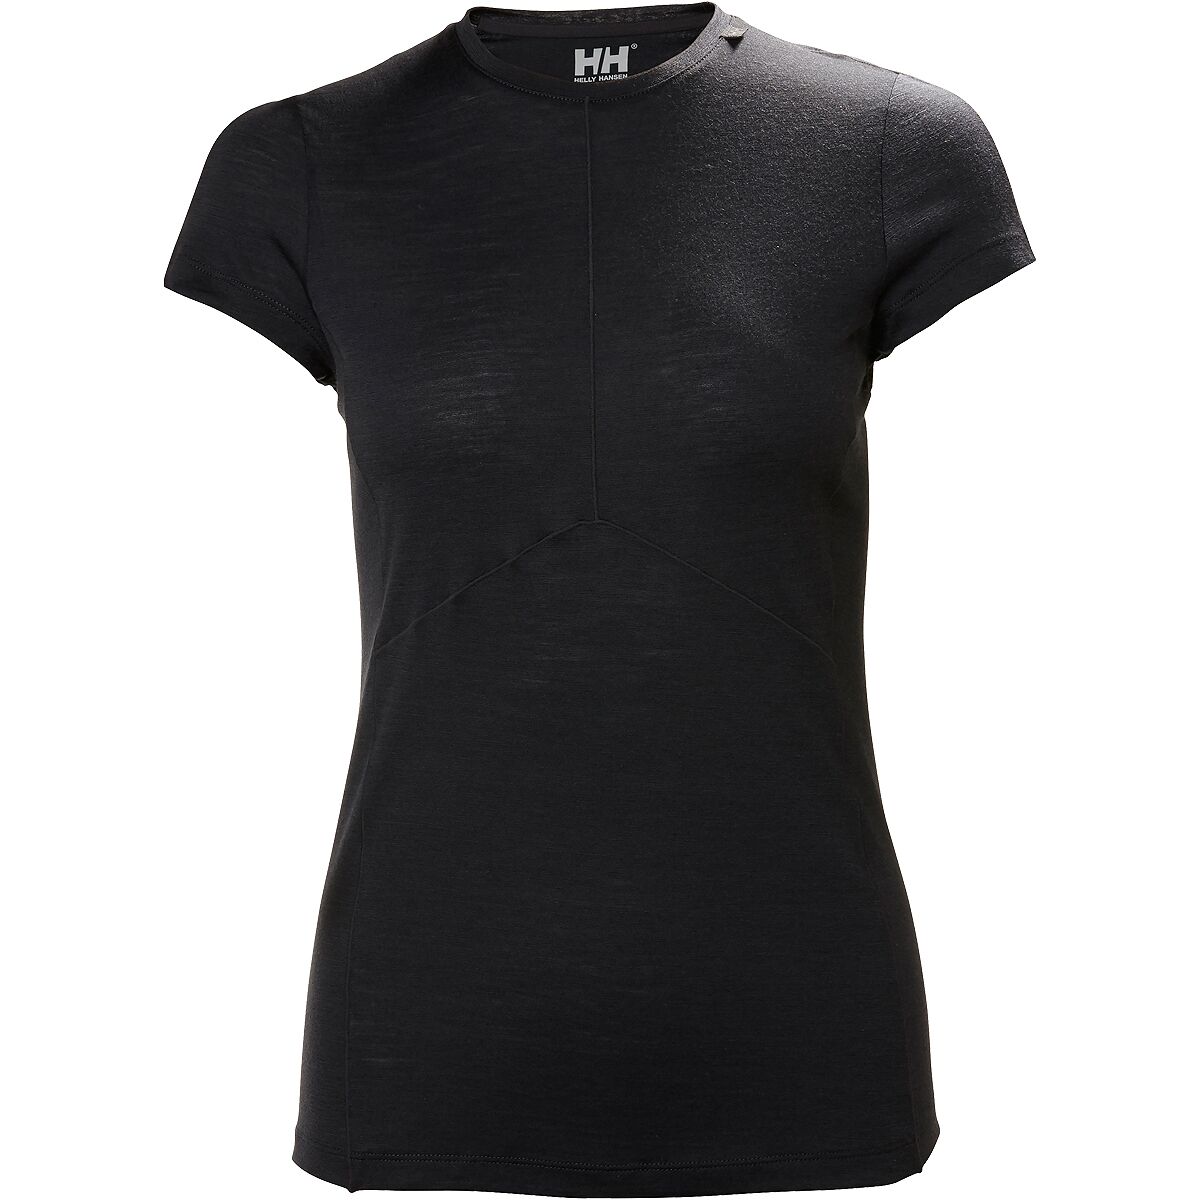 Helly Hansen Merino Light T-Shirt - Women's